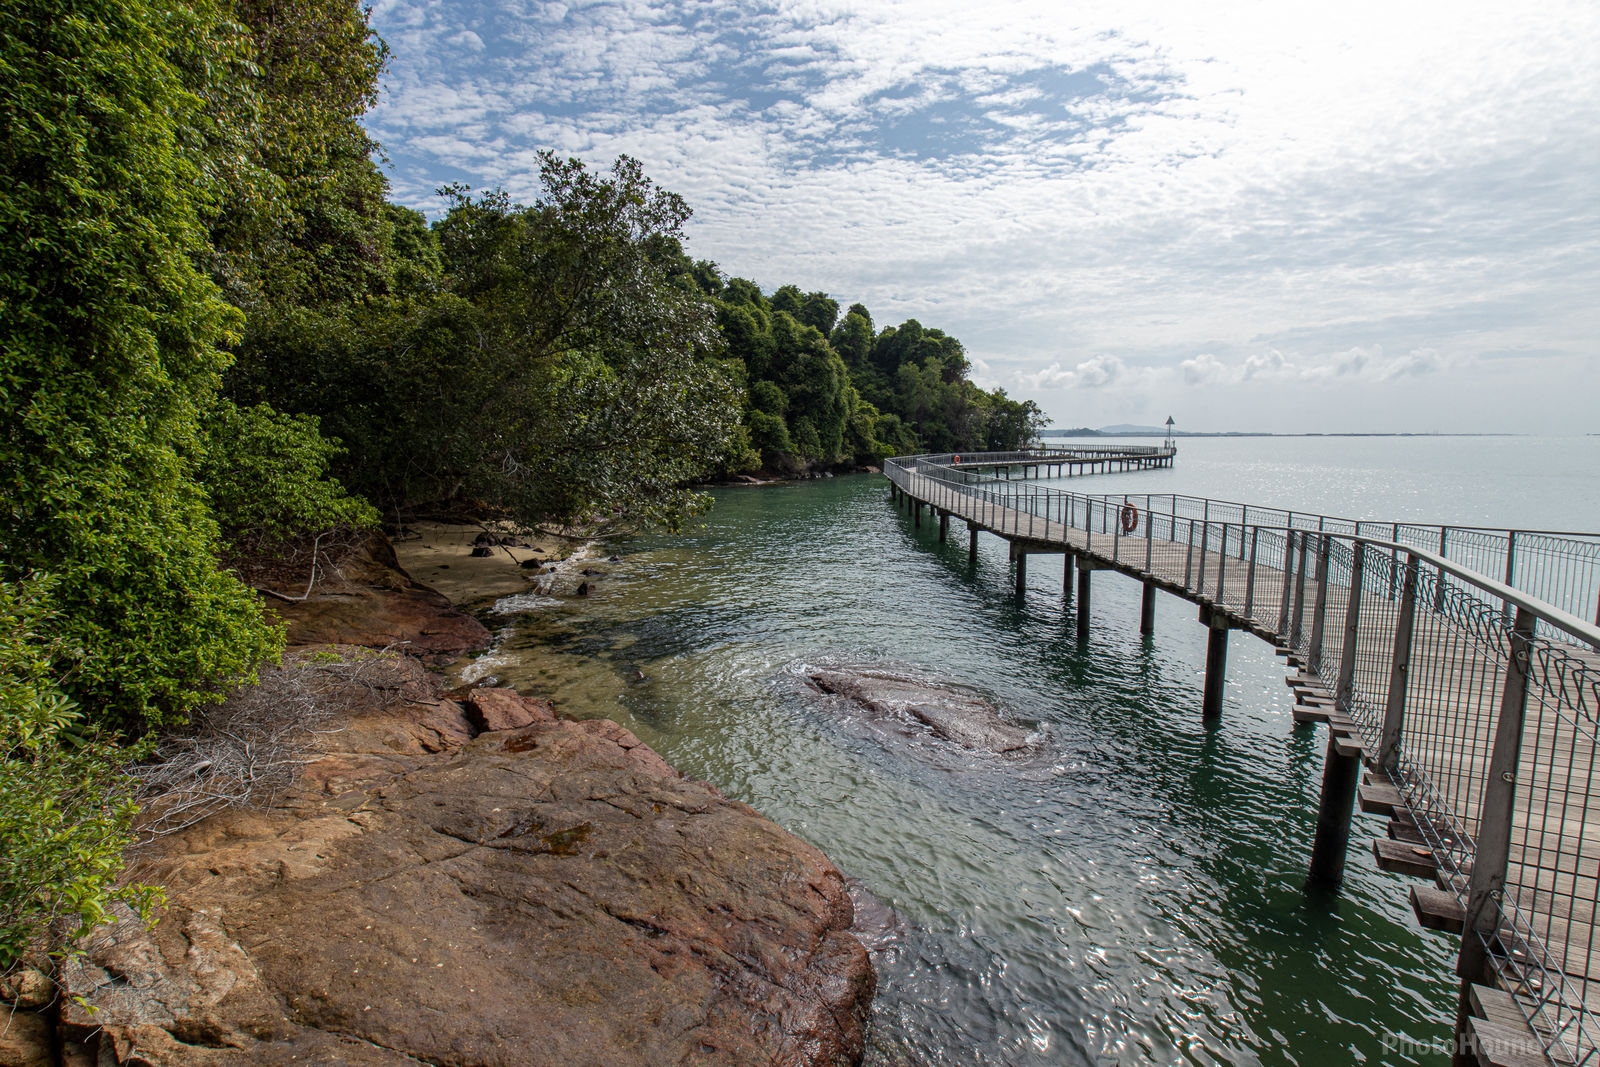 Image of Pulau Ubin - SIngapore by Ruud Bijvank